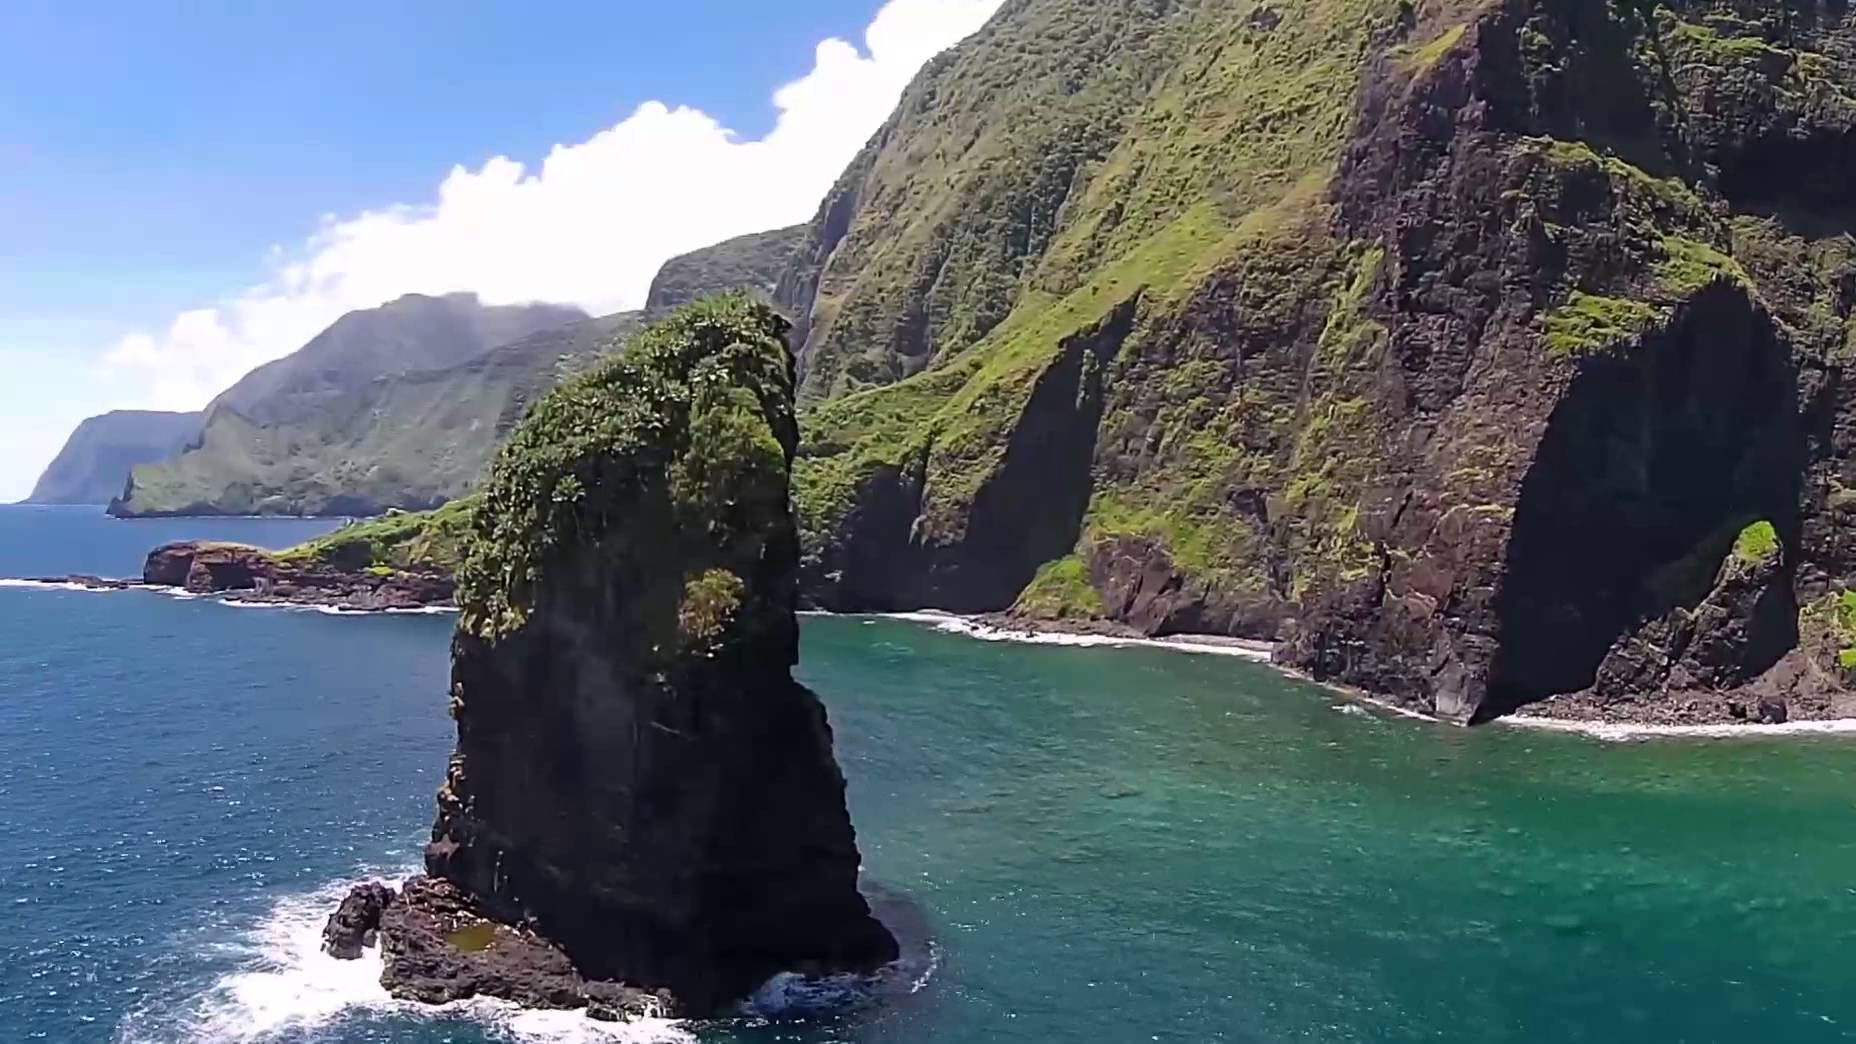 Hawaiian Coastline: DJI Phantom Aerial Drone Scenics - YouTube